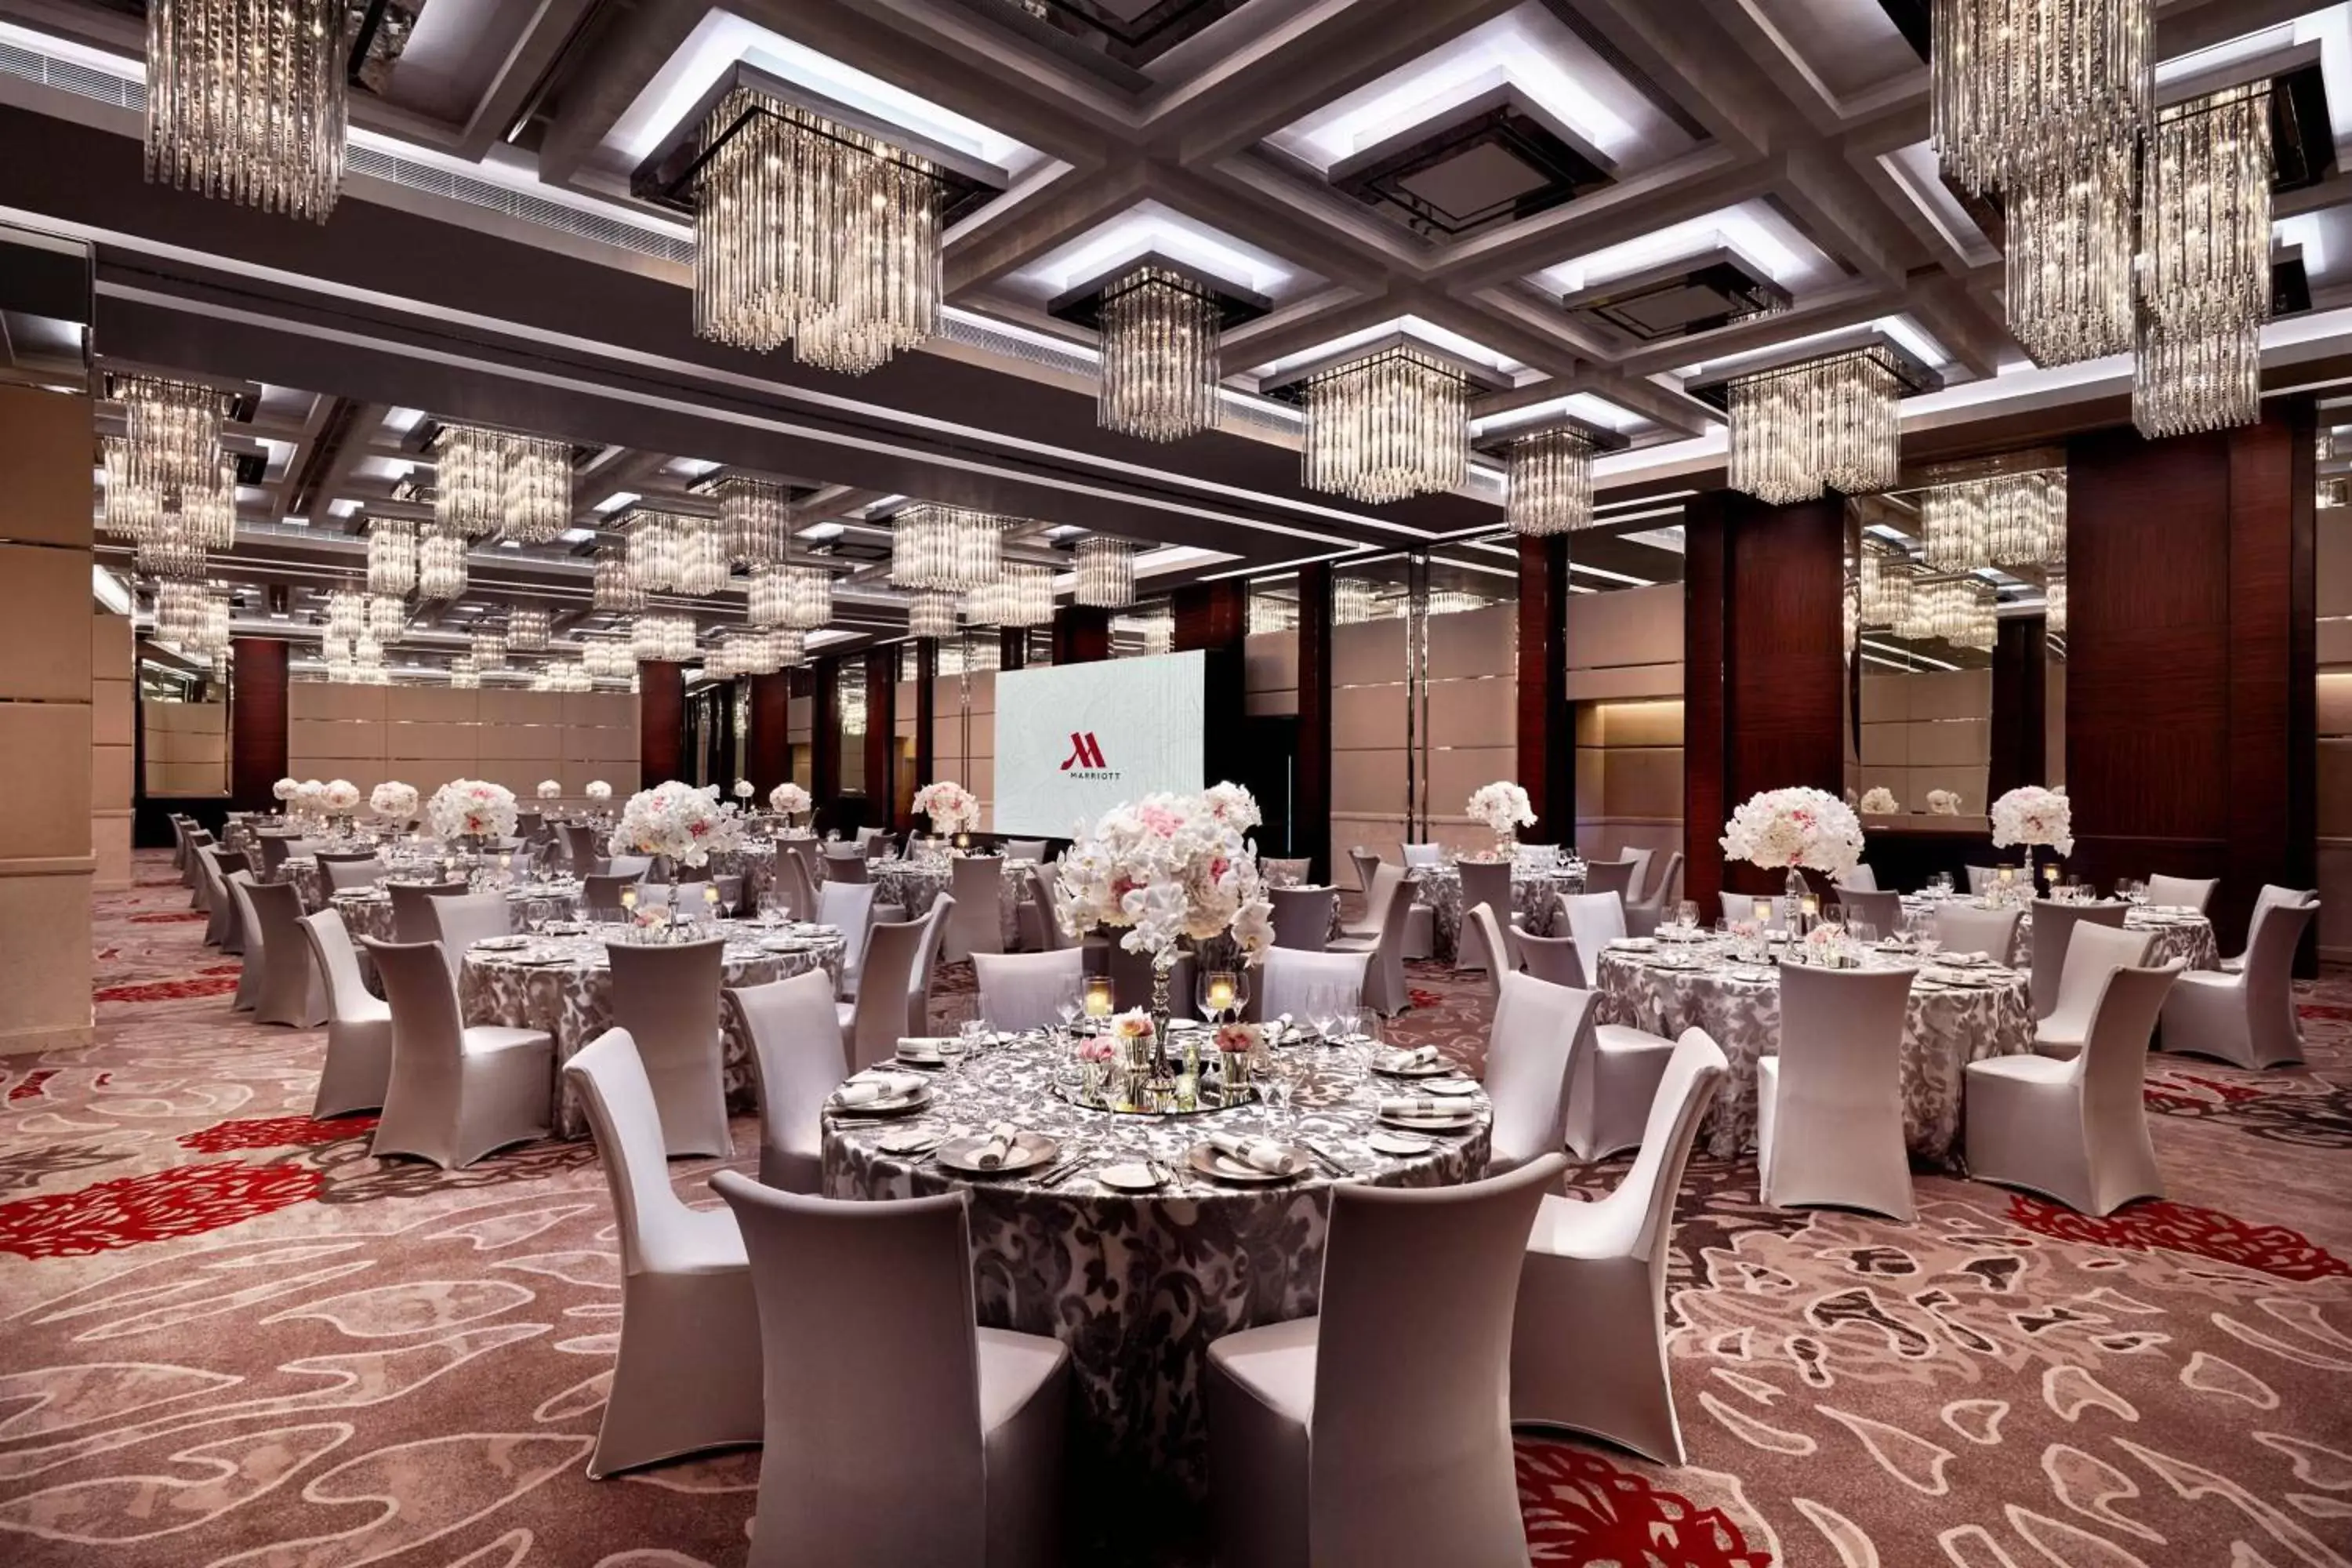 Banquet/Function facilities, Banquet Facilities in Hong Kong SkyCity Marriott Hotel